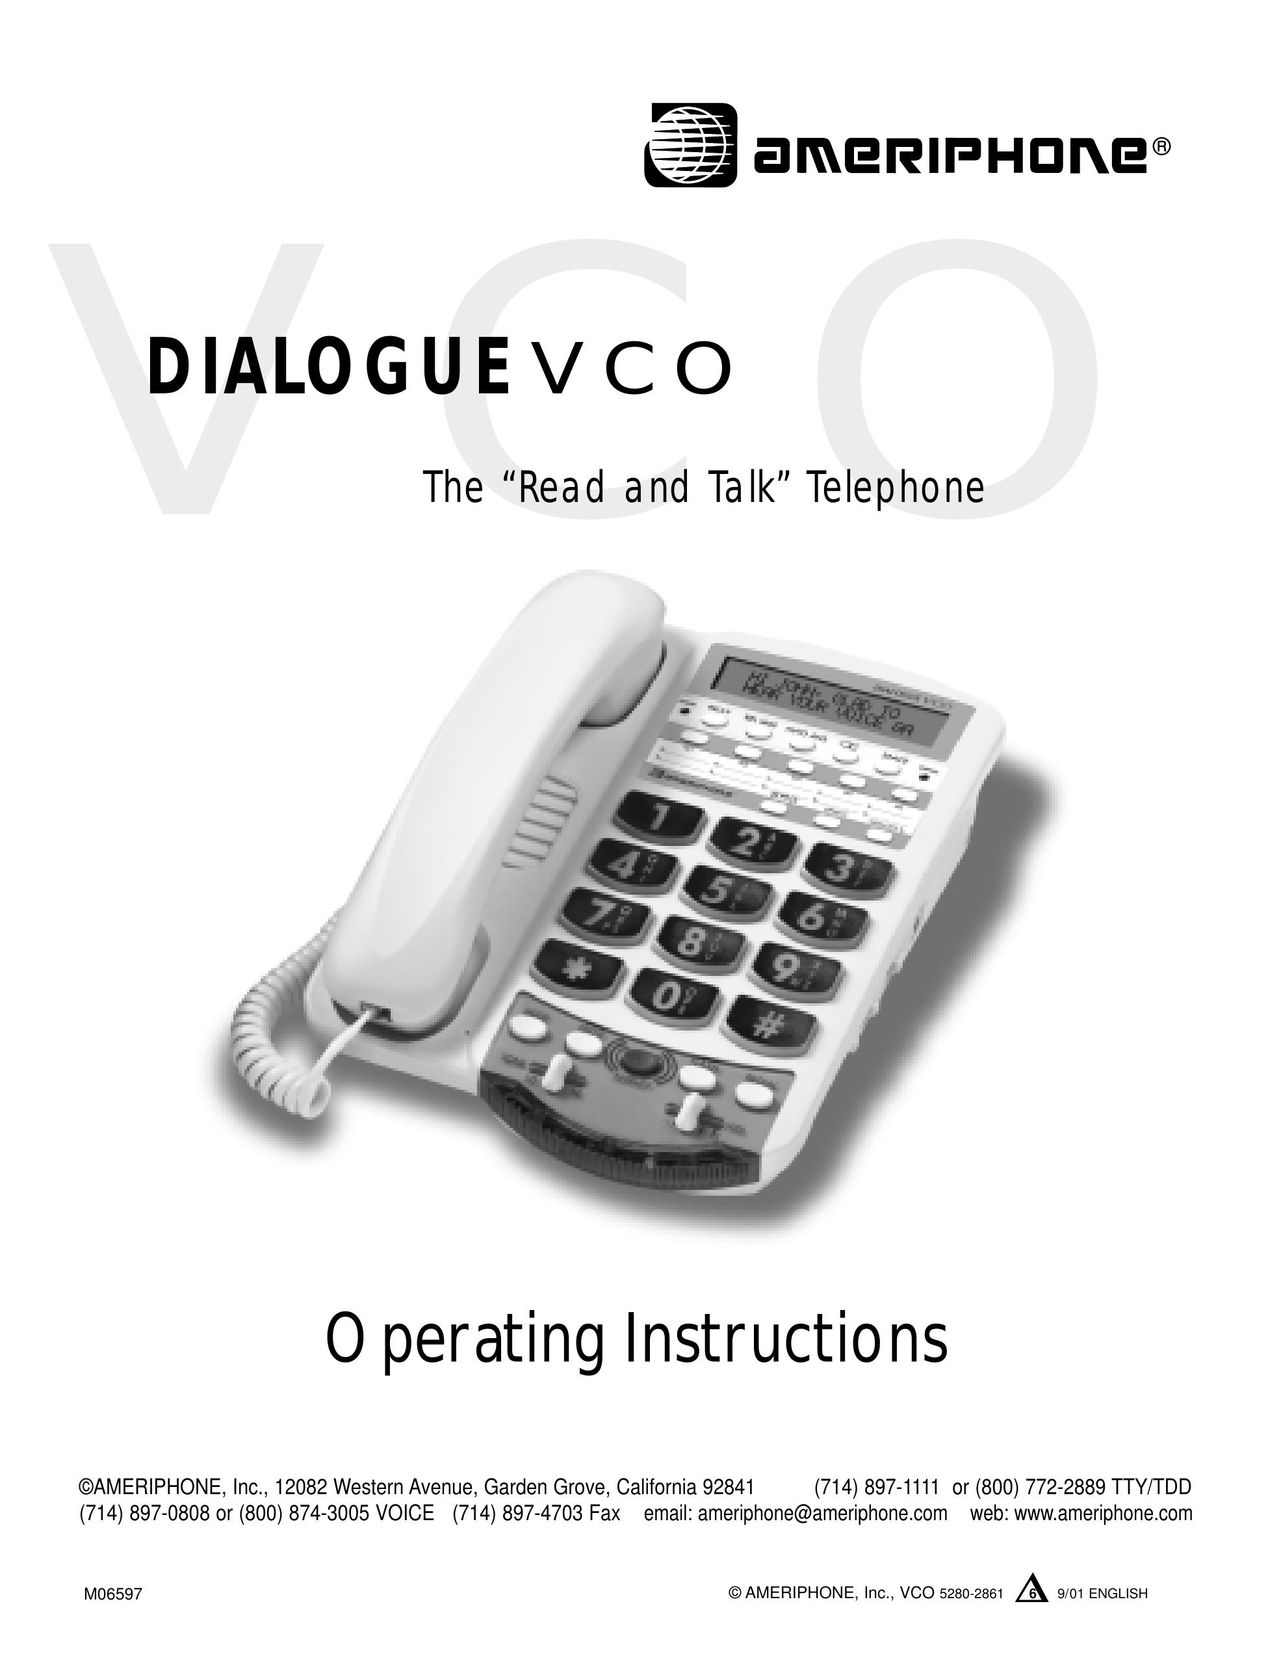 Ameriphone DIALOGUE VCO Telephone User Manual